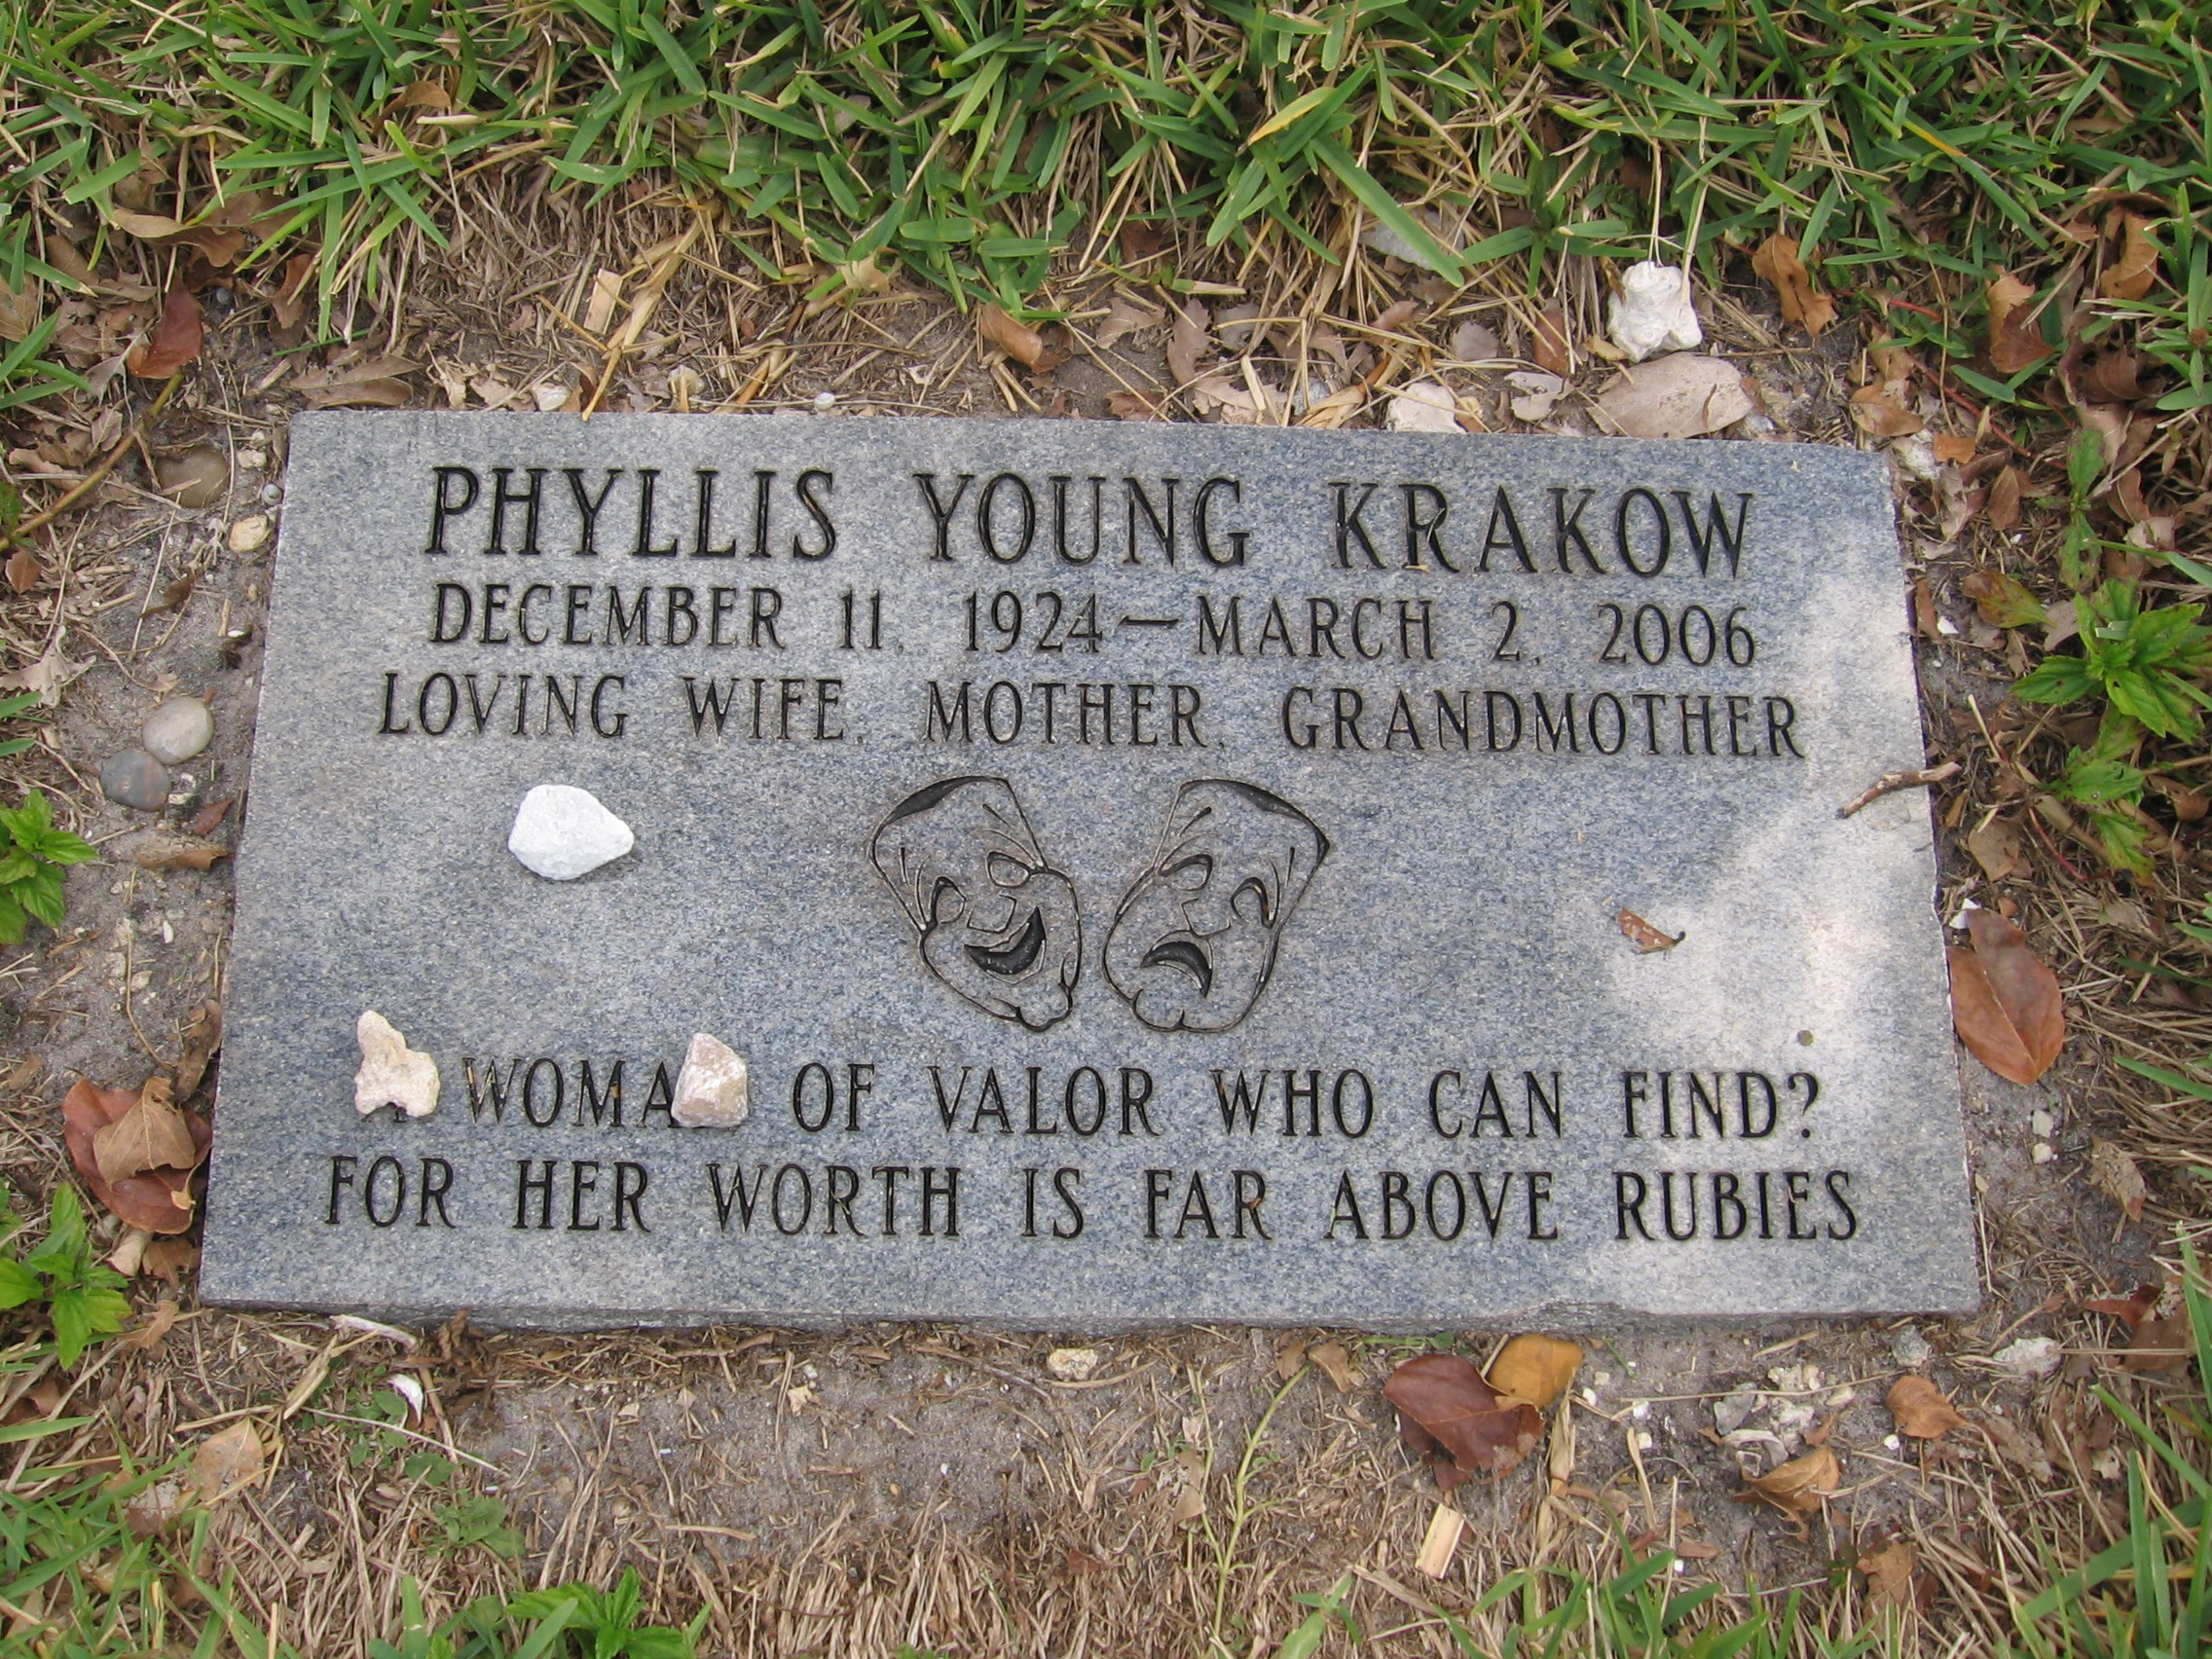 Phyllis Young Krakow